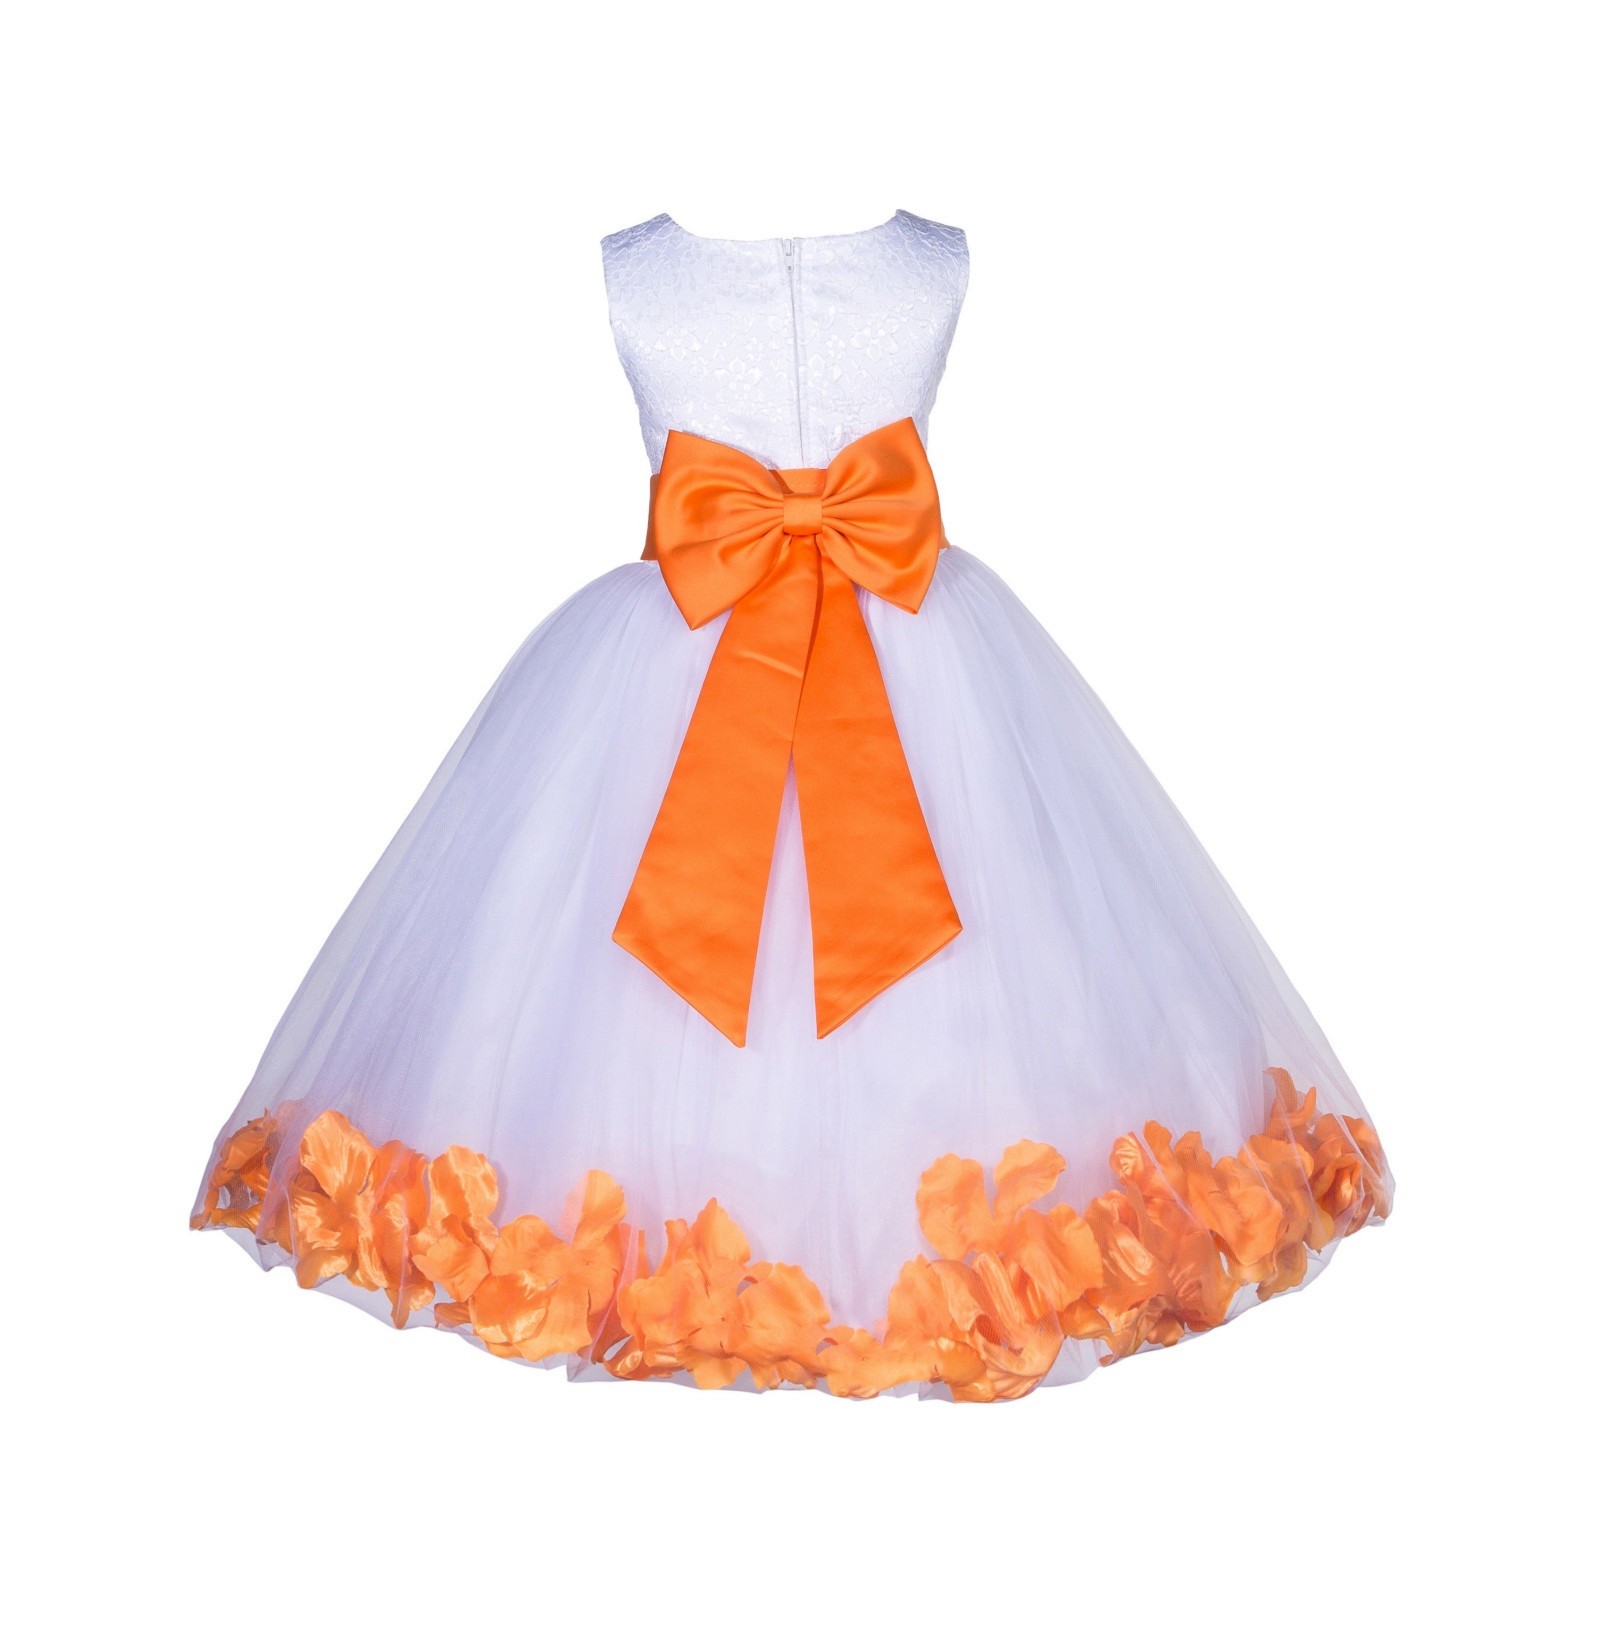 White/Orange Lace Top Tulle Floral Petals Flower Girl Dress 165T